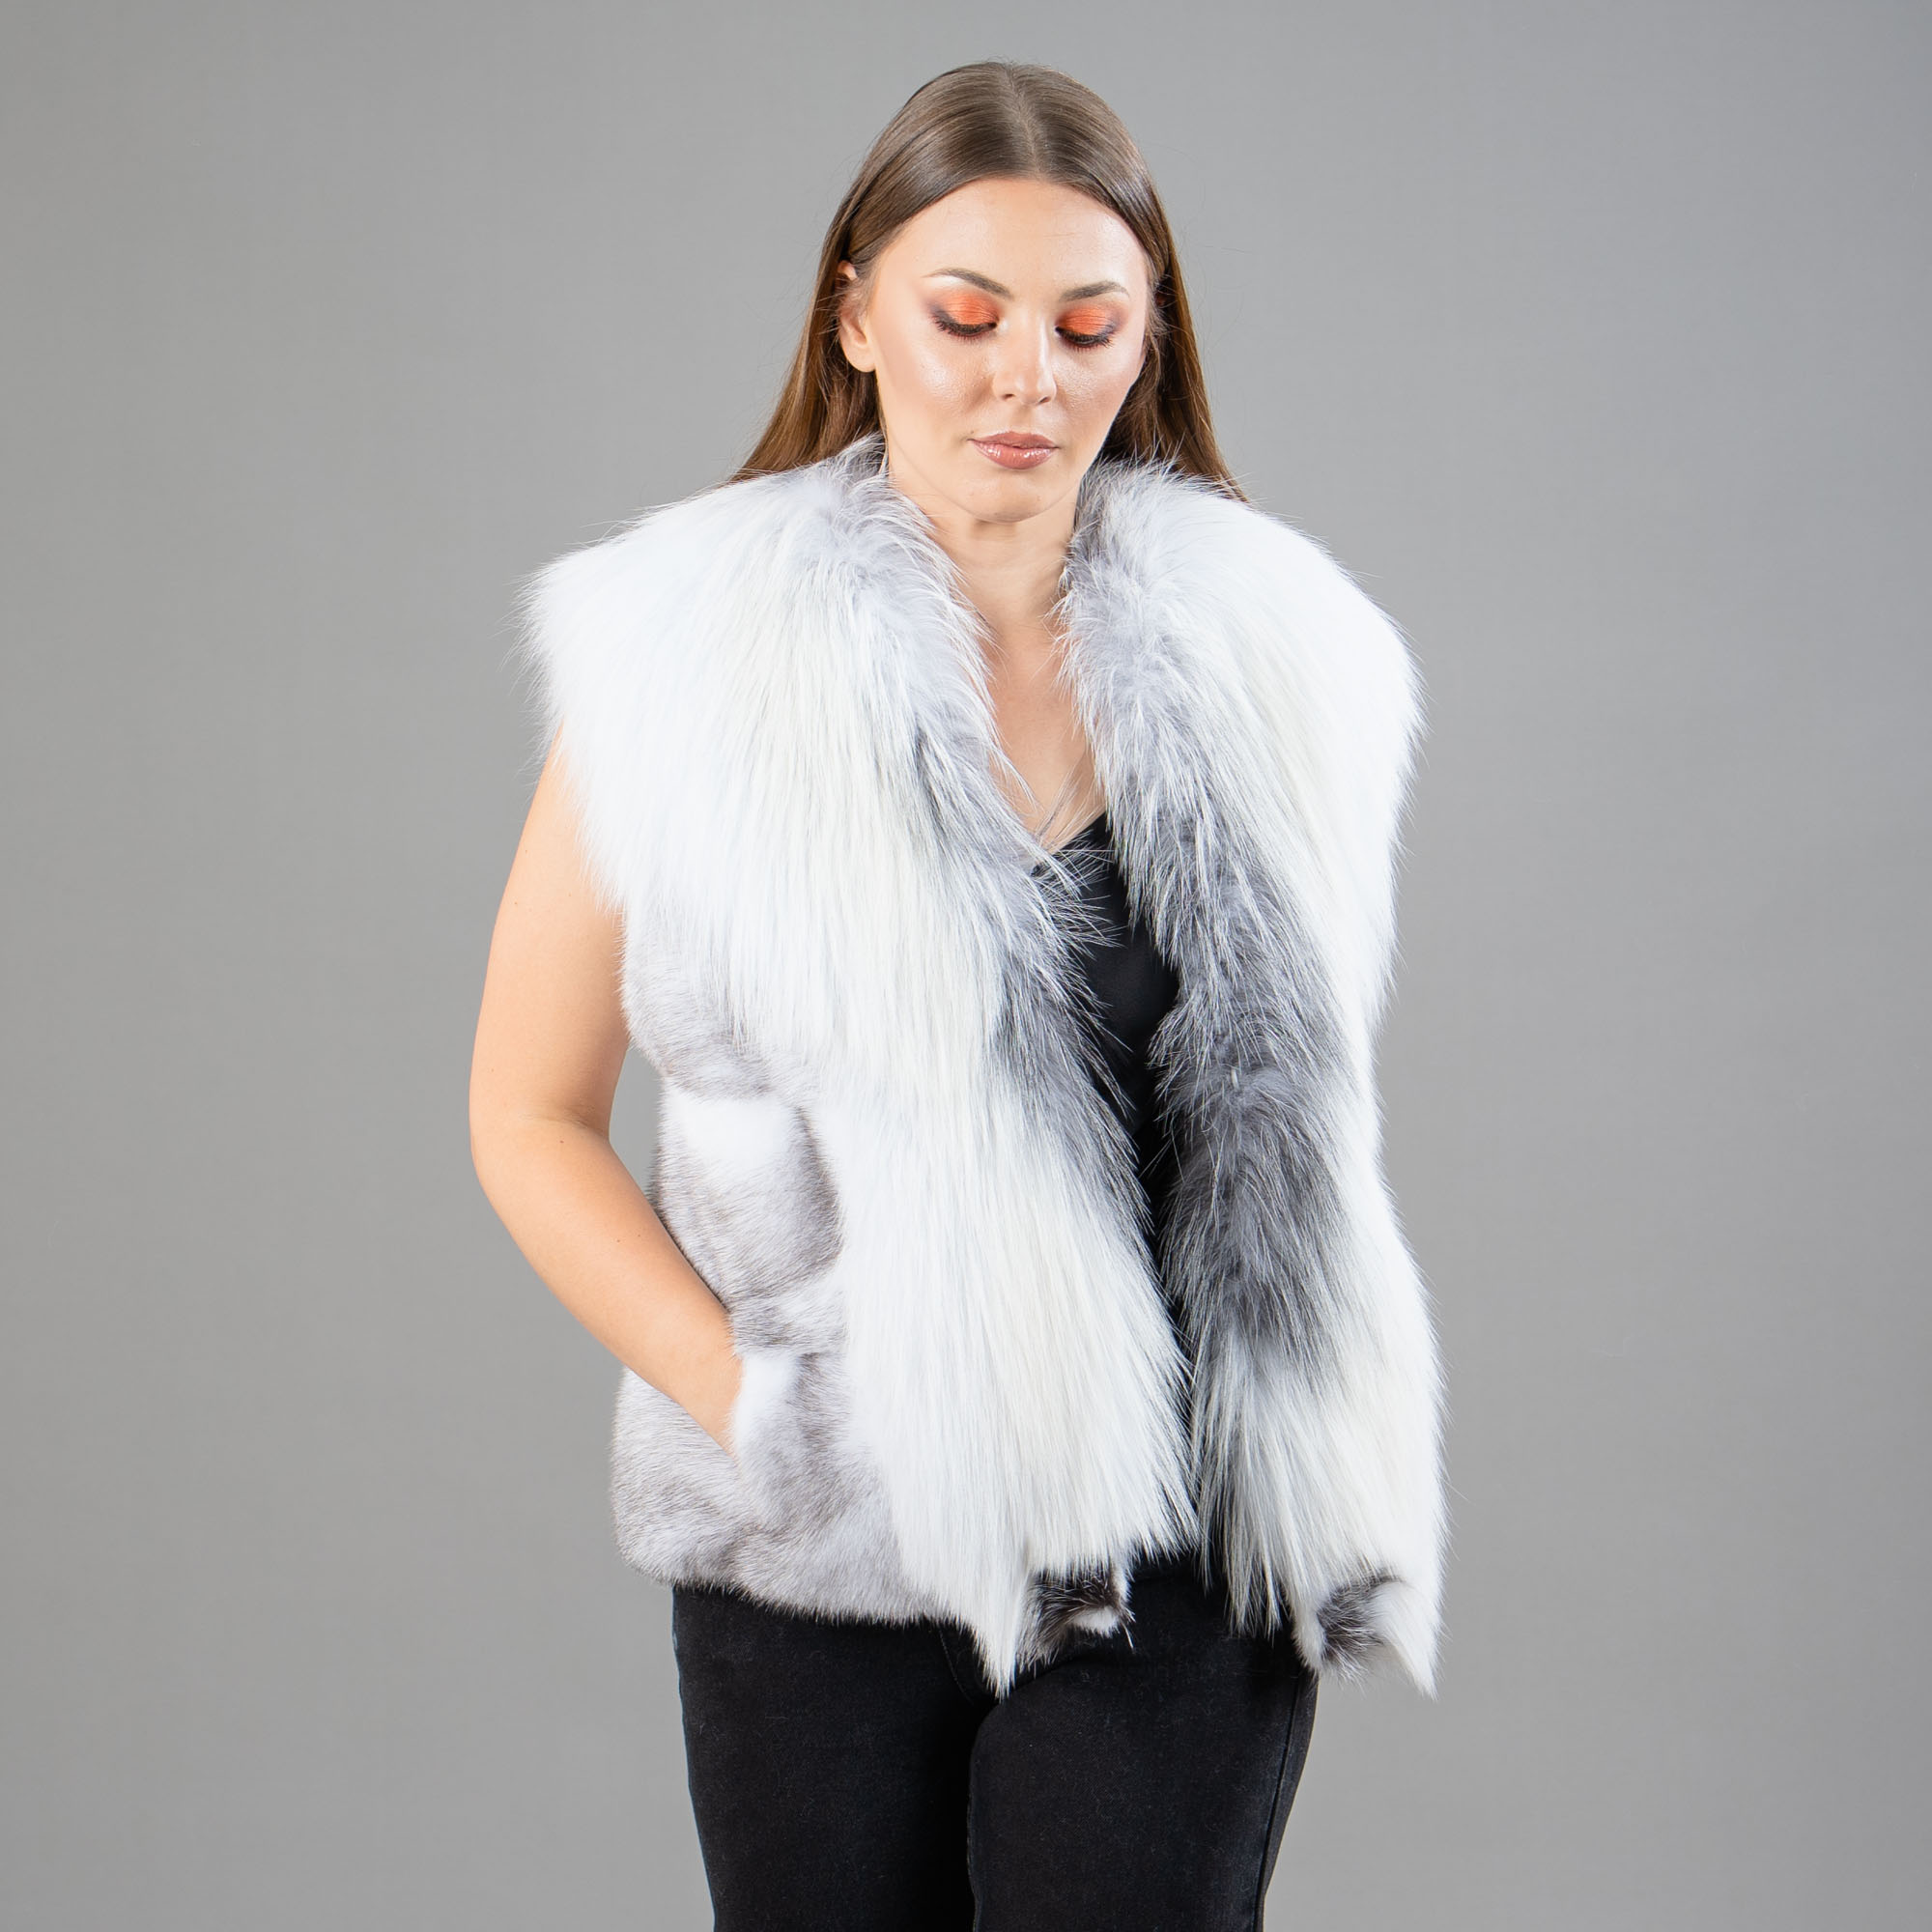 mink and fox fur vest in gray-white color